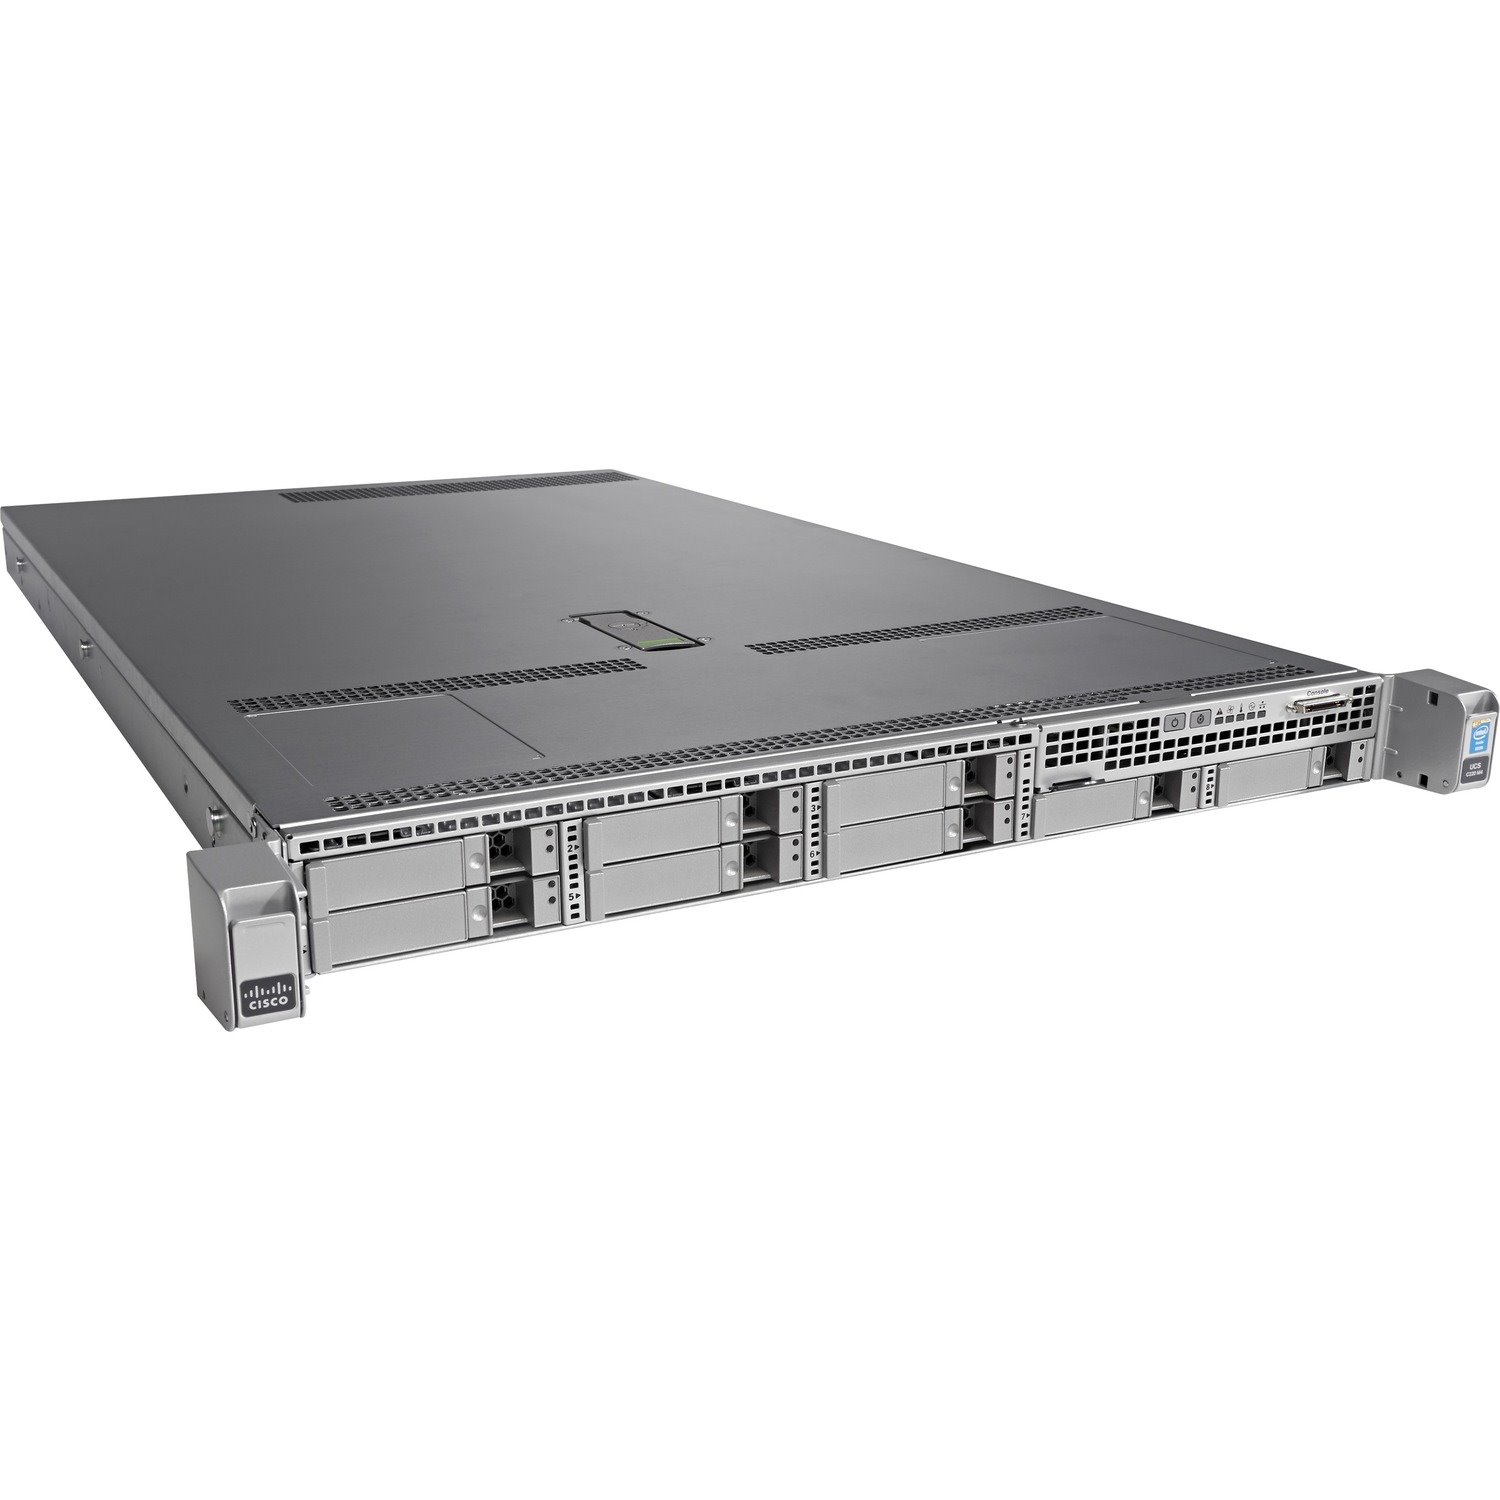 Cisco C220 M4 1U Rack Server - 2 x Intel Xeon E5-2630 v3 2.40 GHz - 64 GB RAM - 2 TB HDD - (2 x 1TB) HDD Configuration - Serial ATA/600 Controller